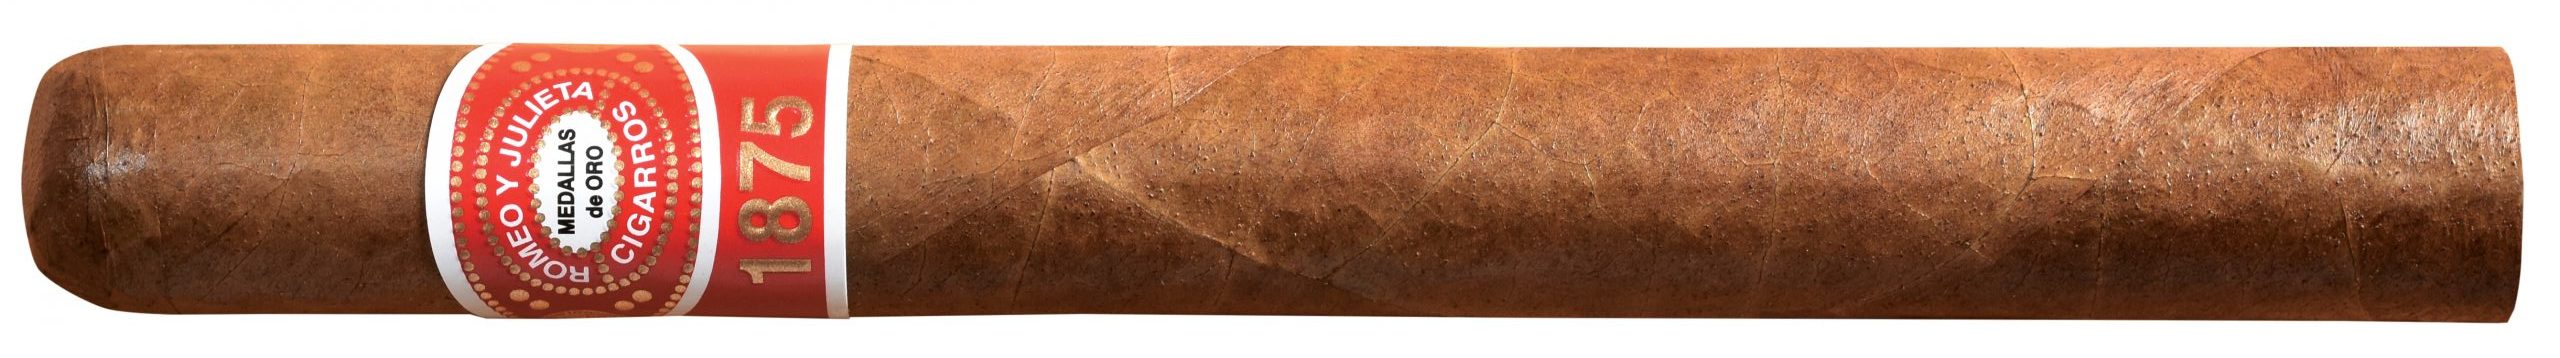 romeo y julieta 1875 churchill single cigar